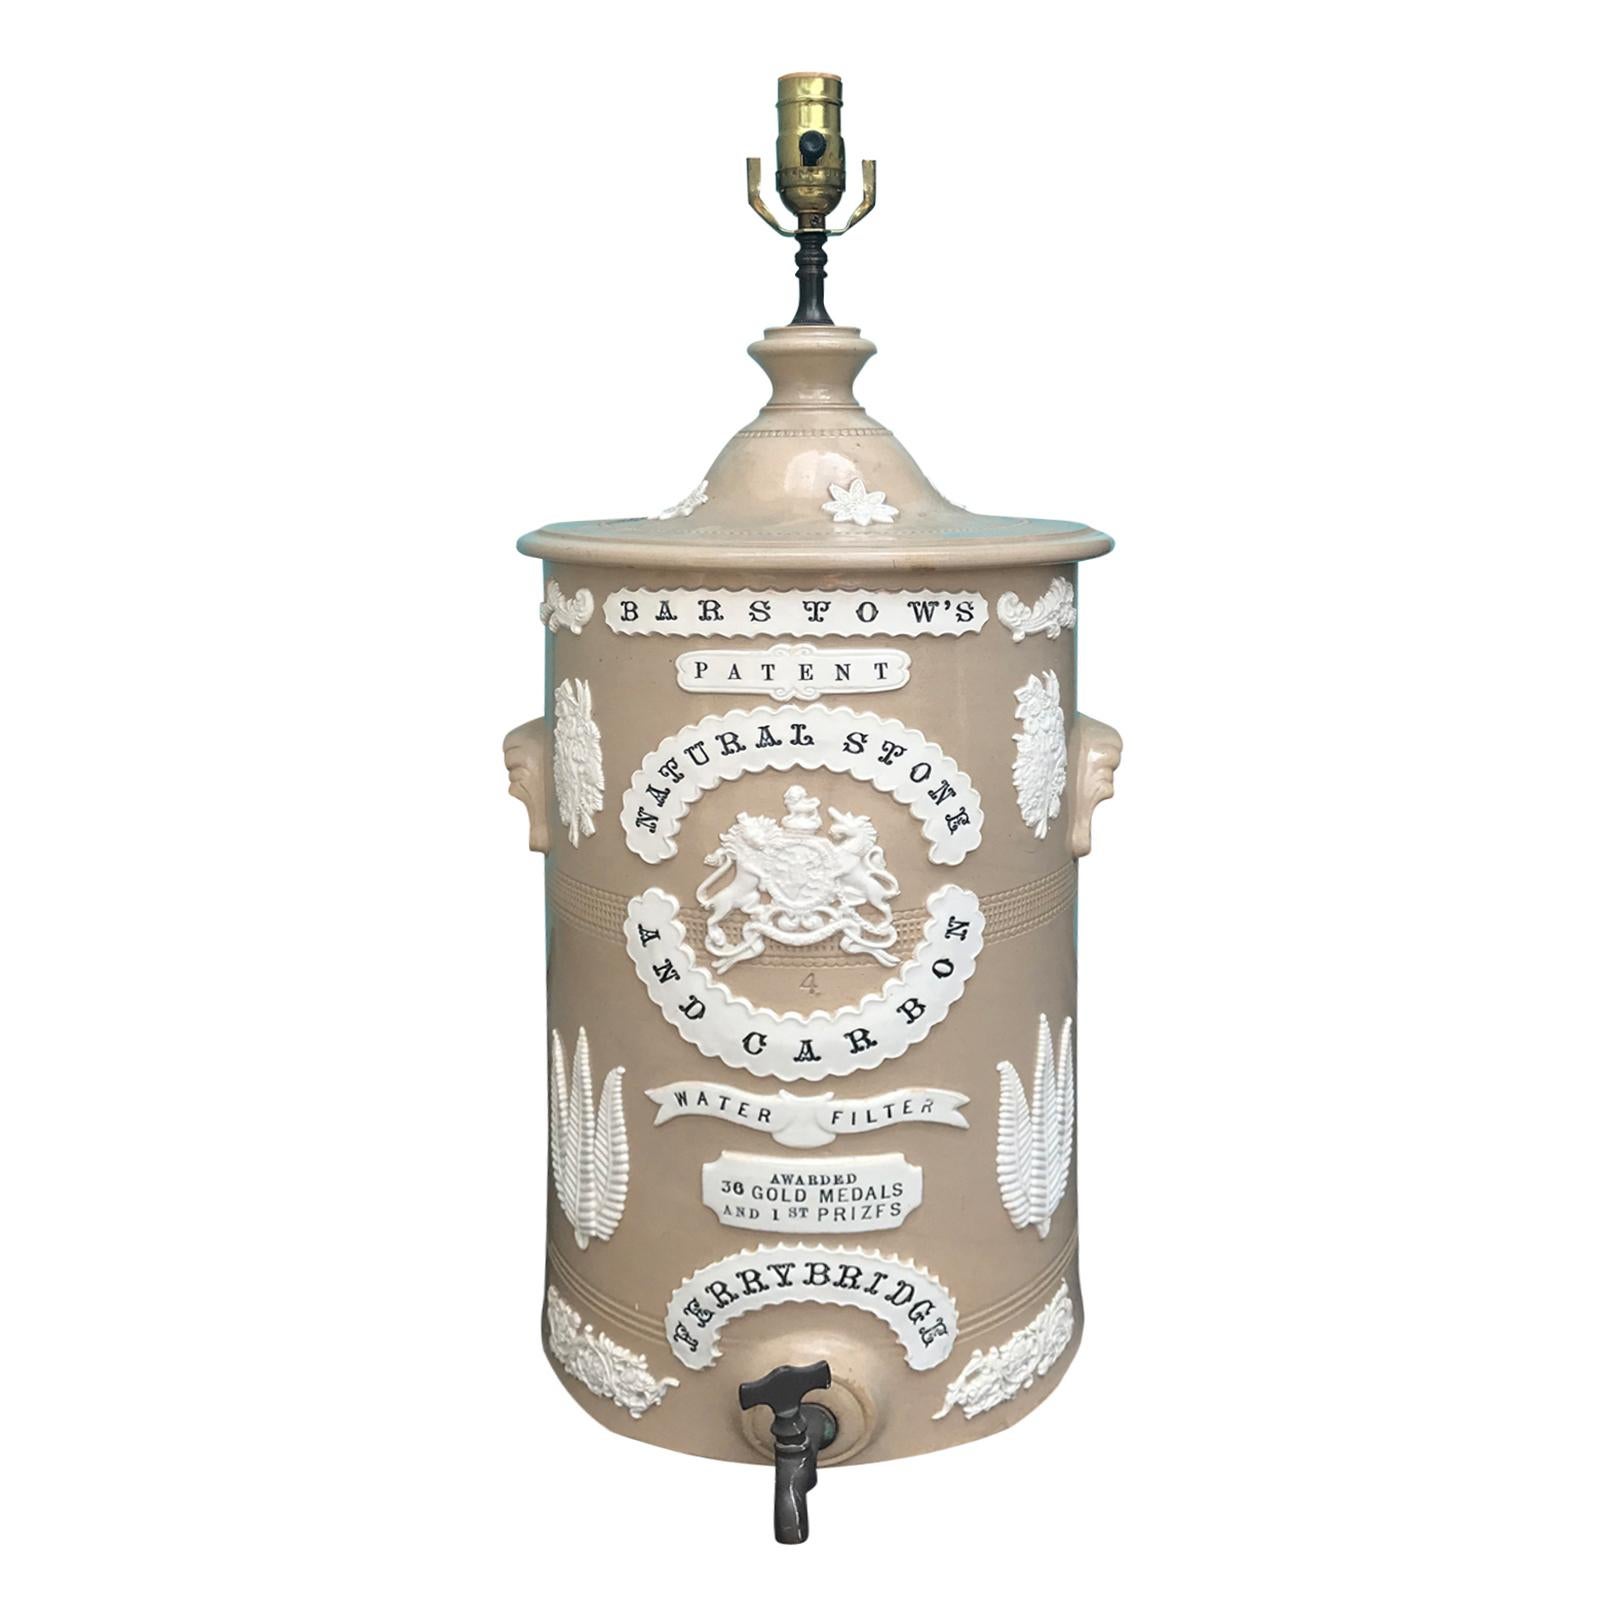 19th Century English Drabware Water Filter Lamp